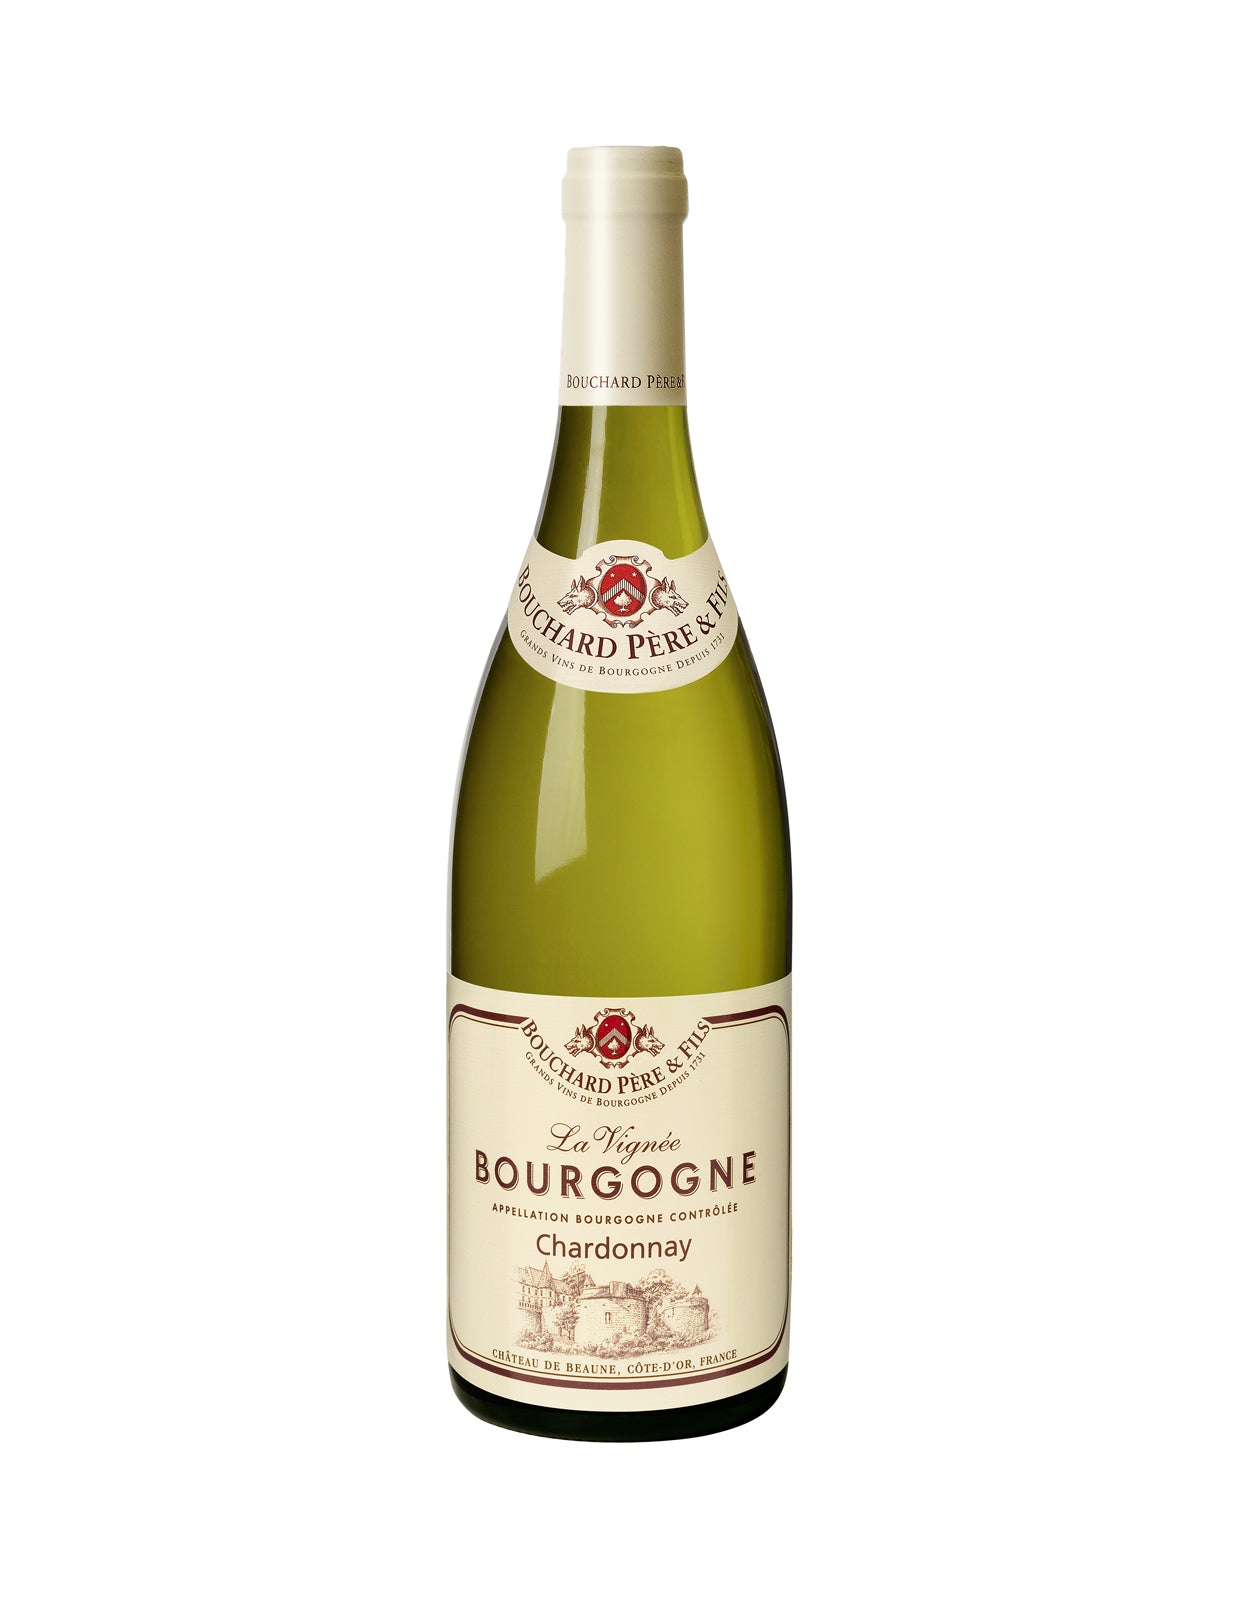 Bouchard Pere & Fils Chardonnay La Vignee Bourgogne 2019